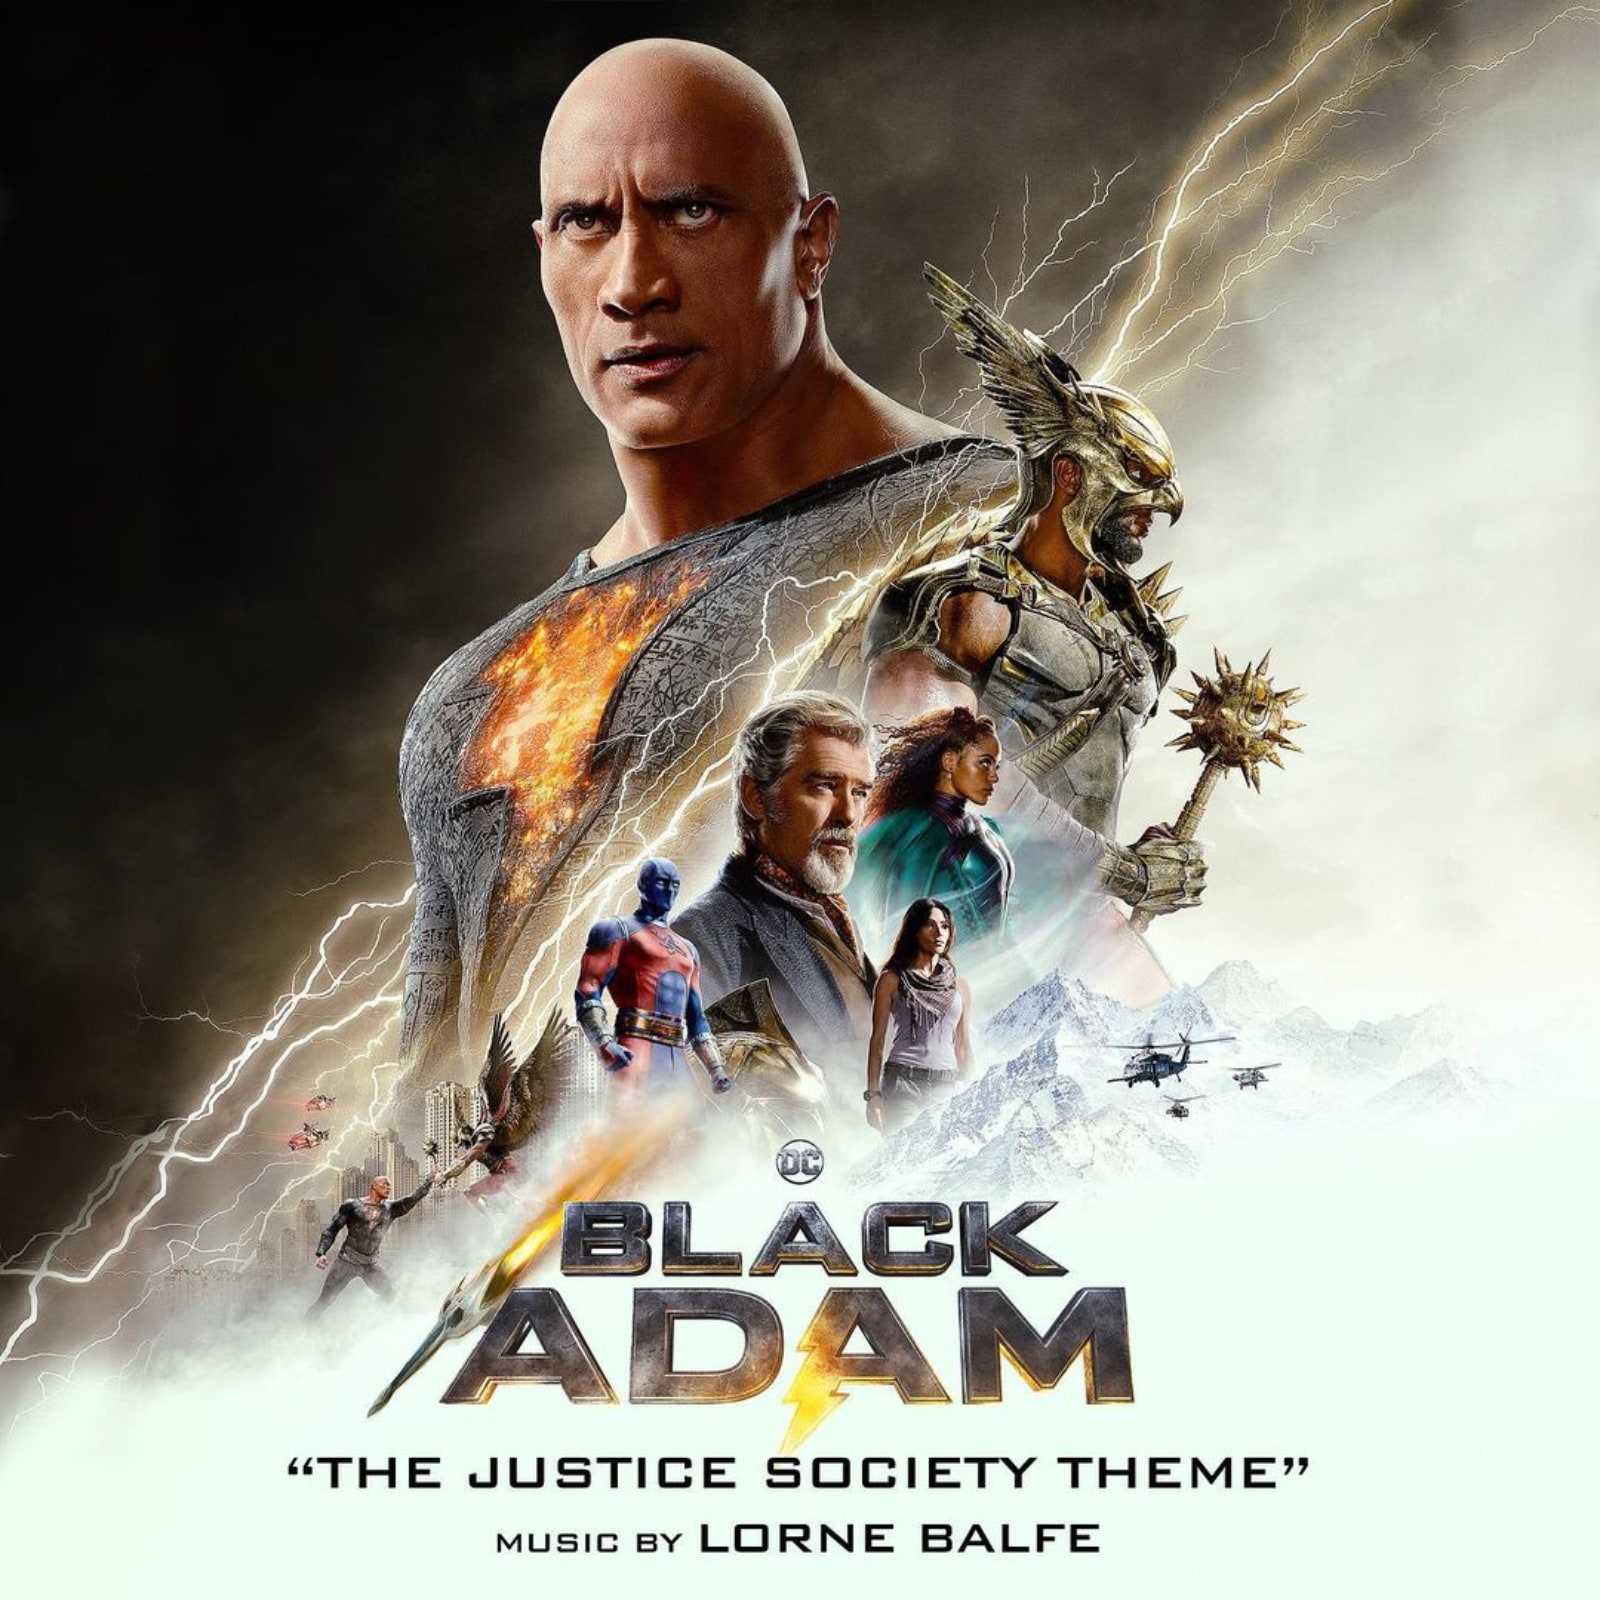 Black Adam Review: Despite Its Flaws, Dwayne Johnson Film Makes